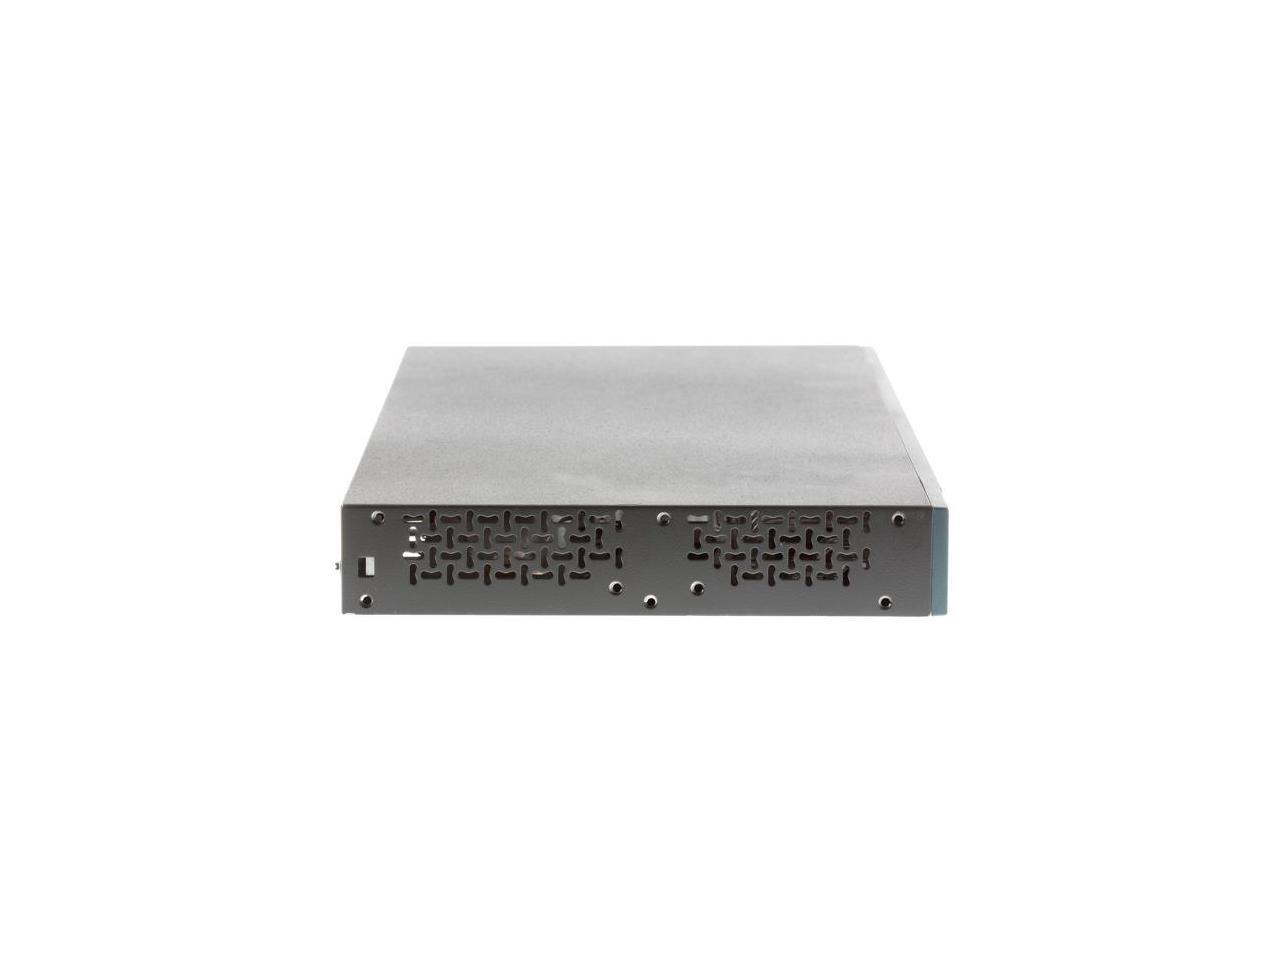 Cisco WS-C2950-24 Catalyst 2950-24 Ethernet Switch